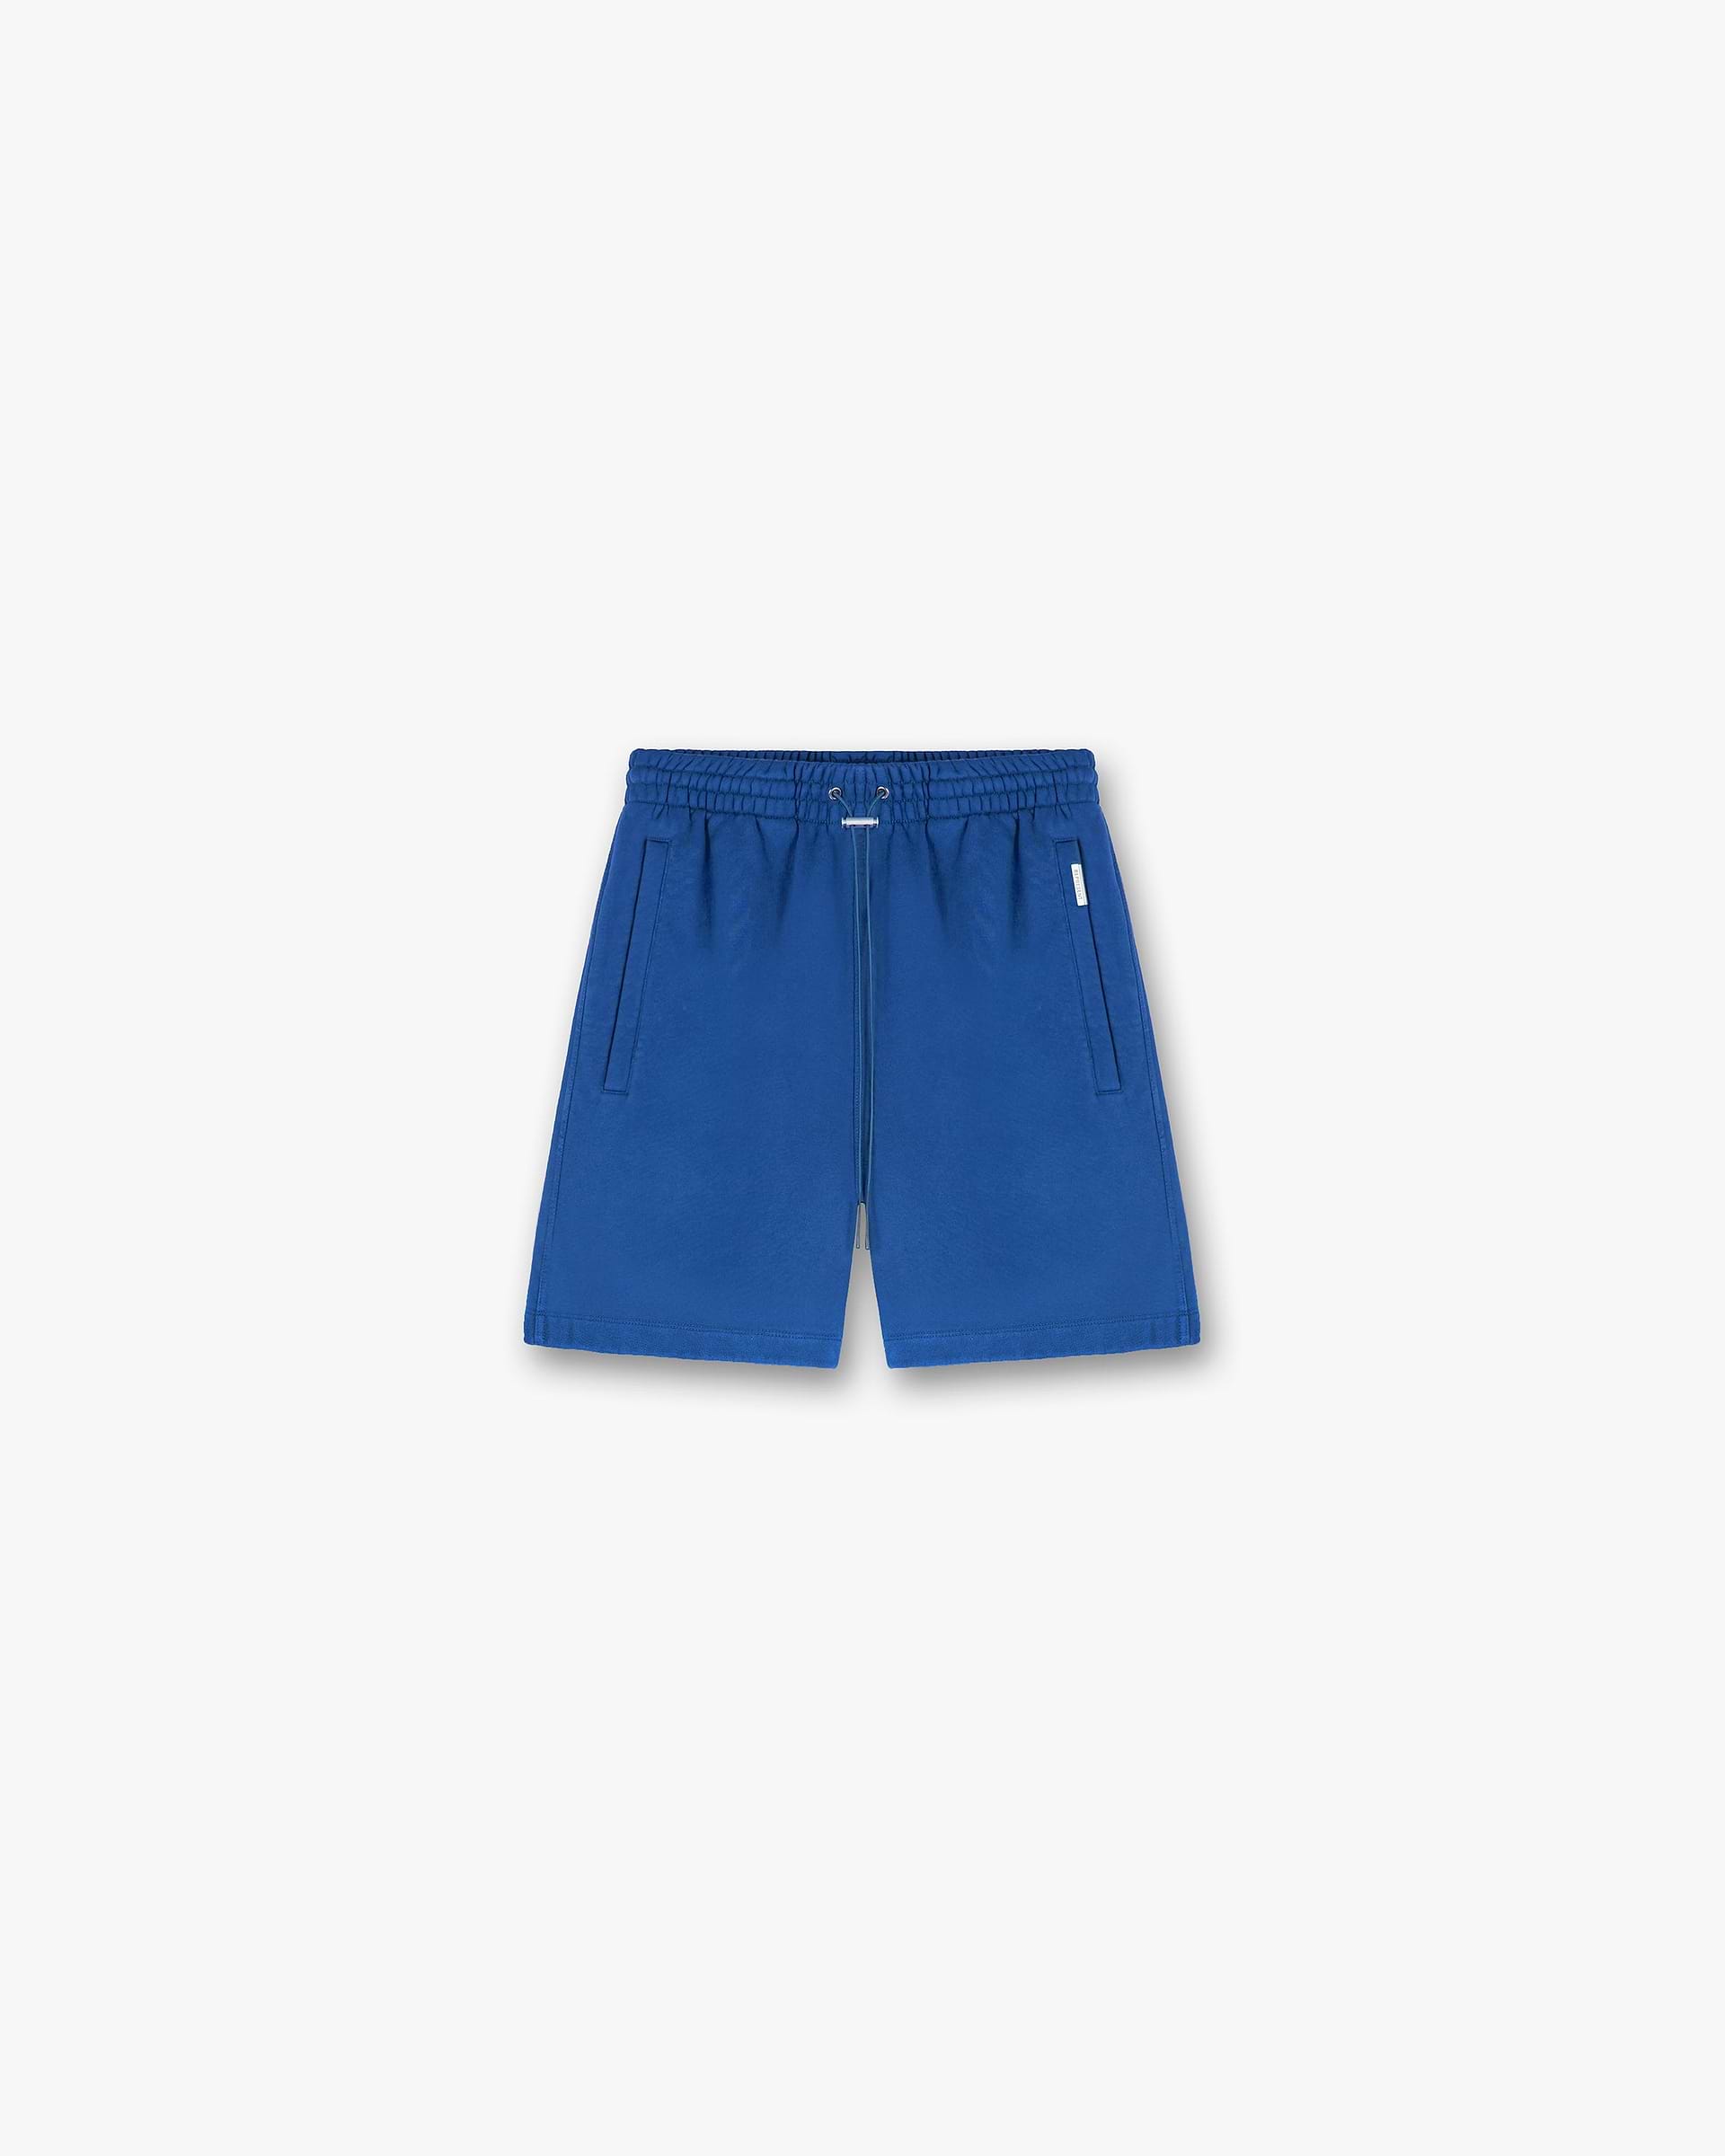 Marine Blue Shorts | Blank | Represent Clo